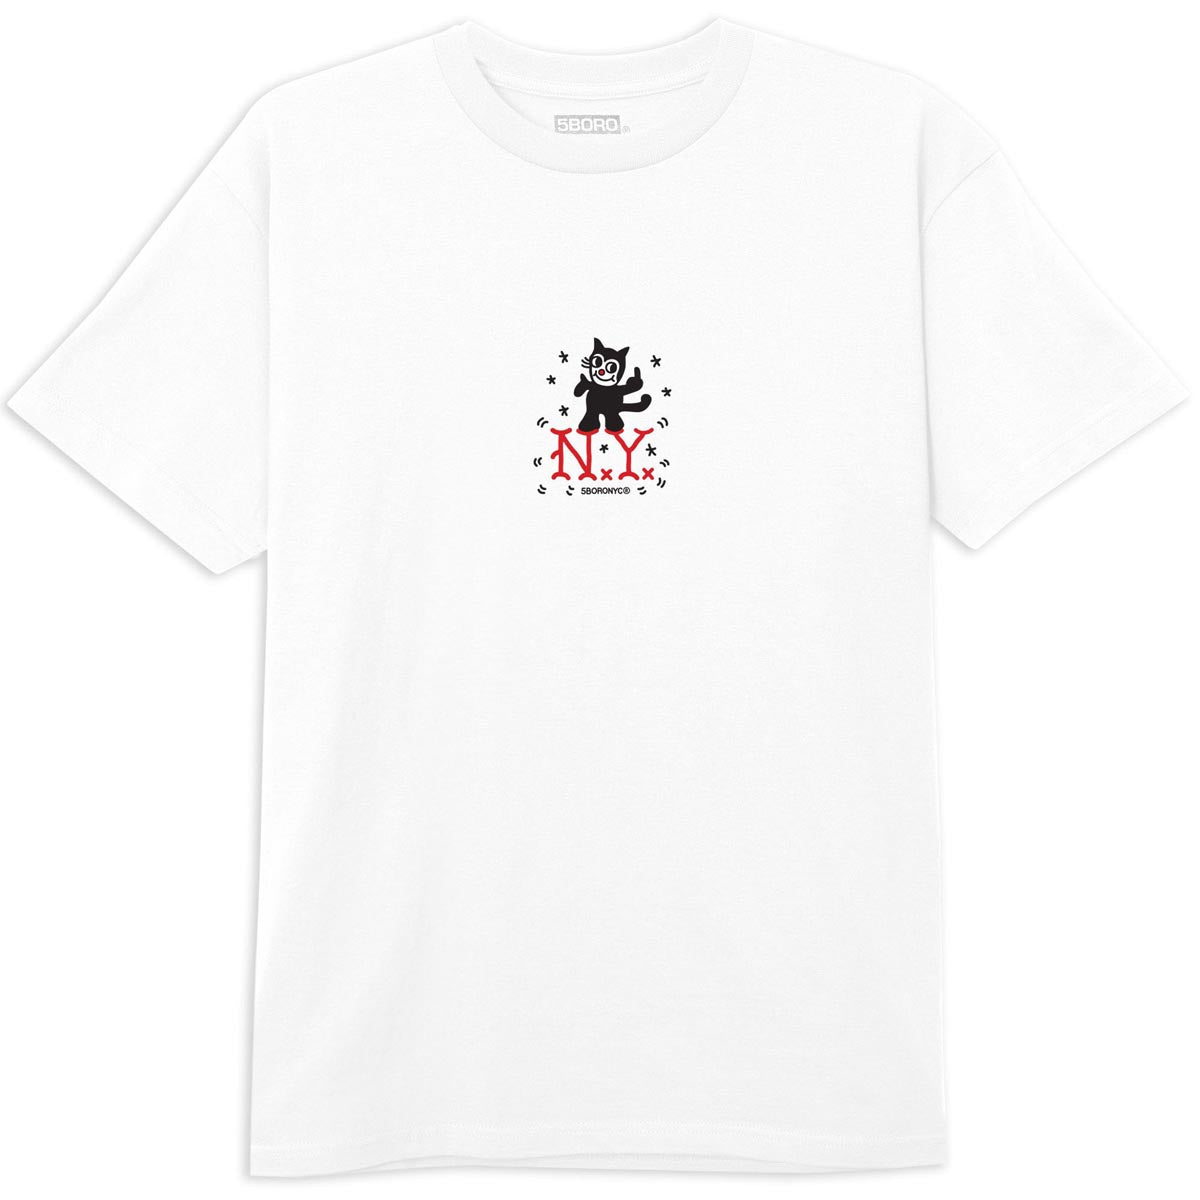 5Boro NY Cat T-Shirt - White/Black/Red image 1